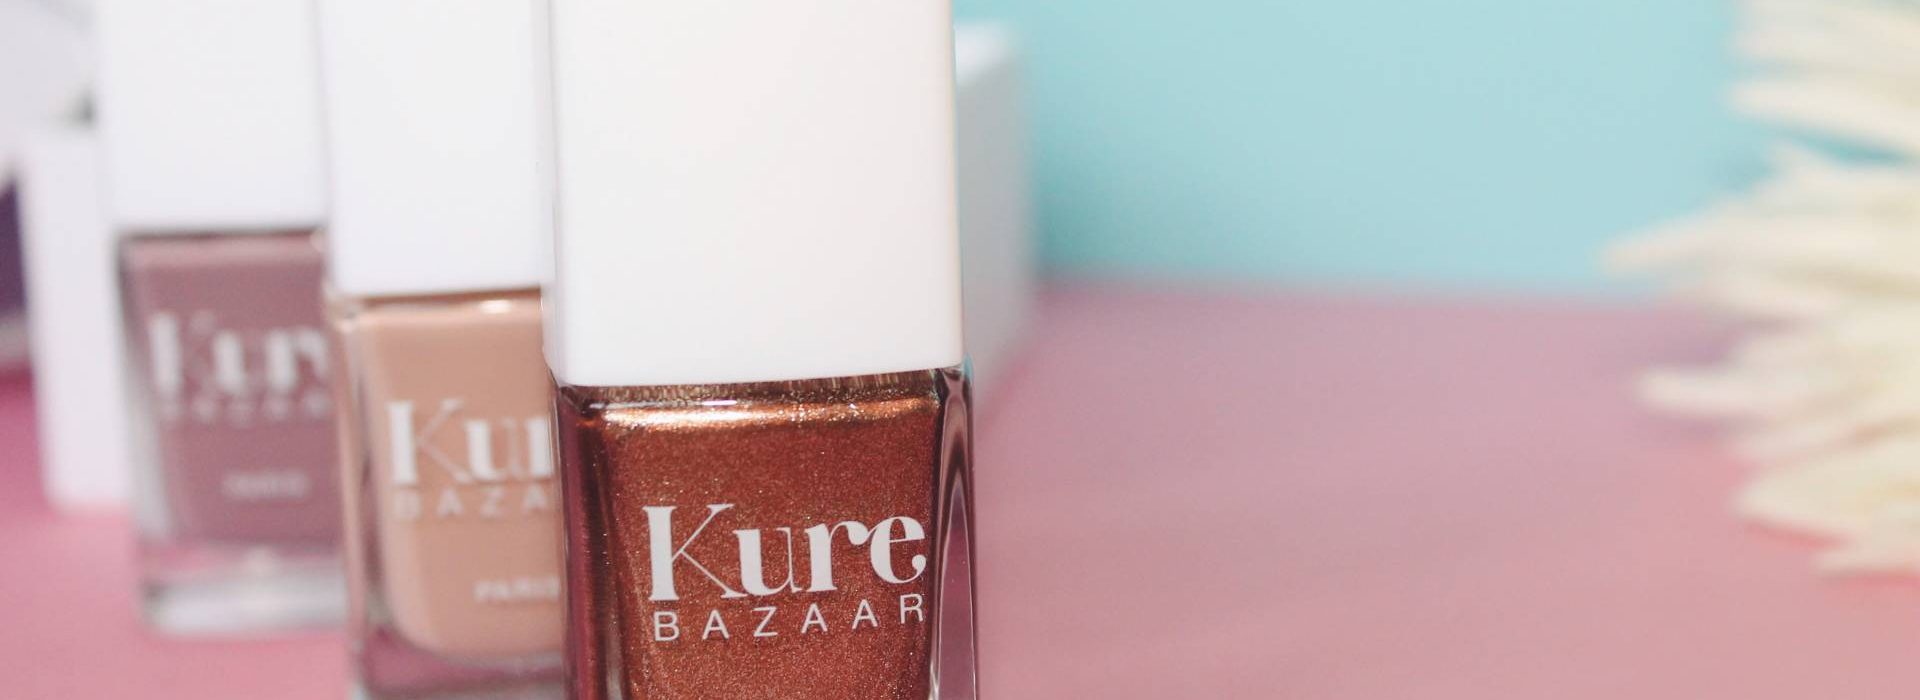 Kure Bazaar non-toxic nail polish